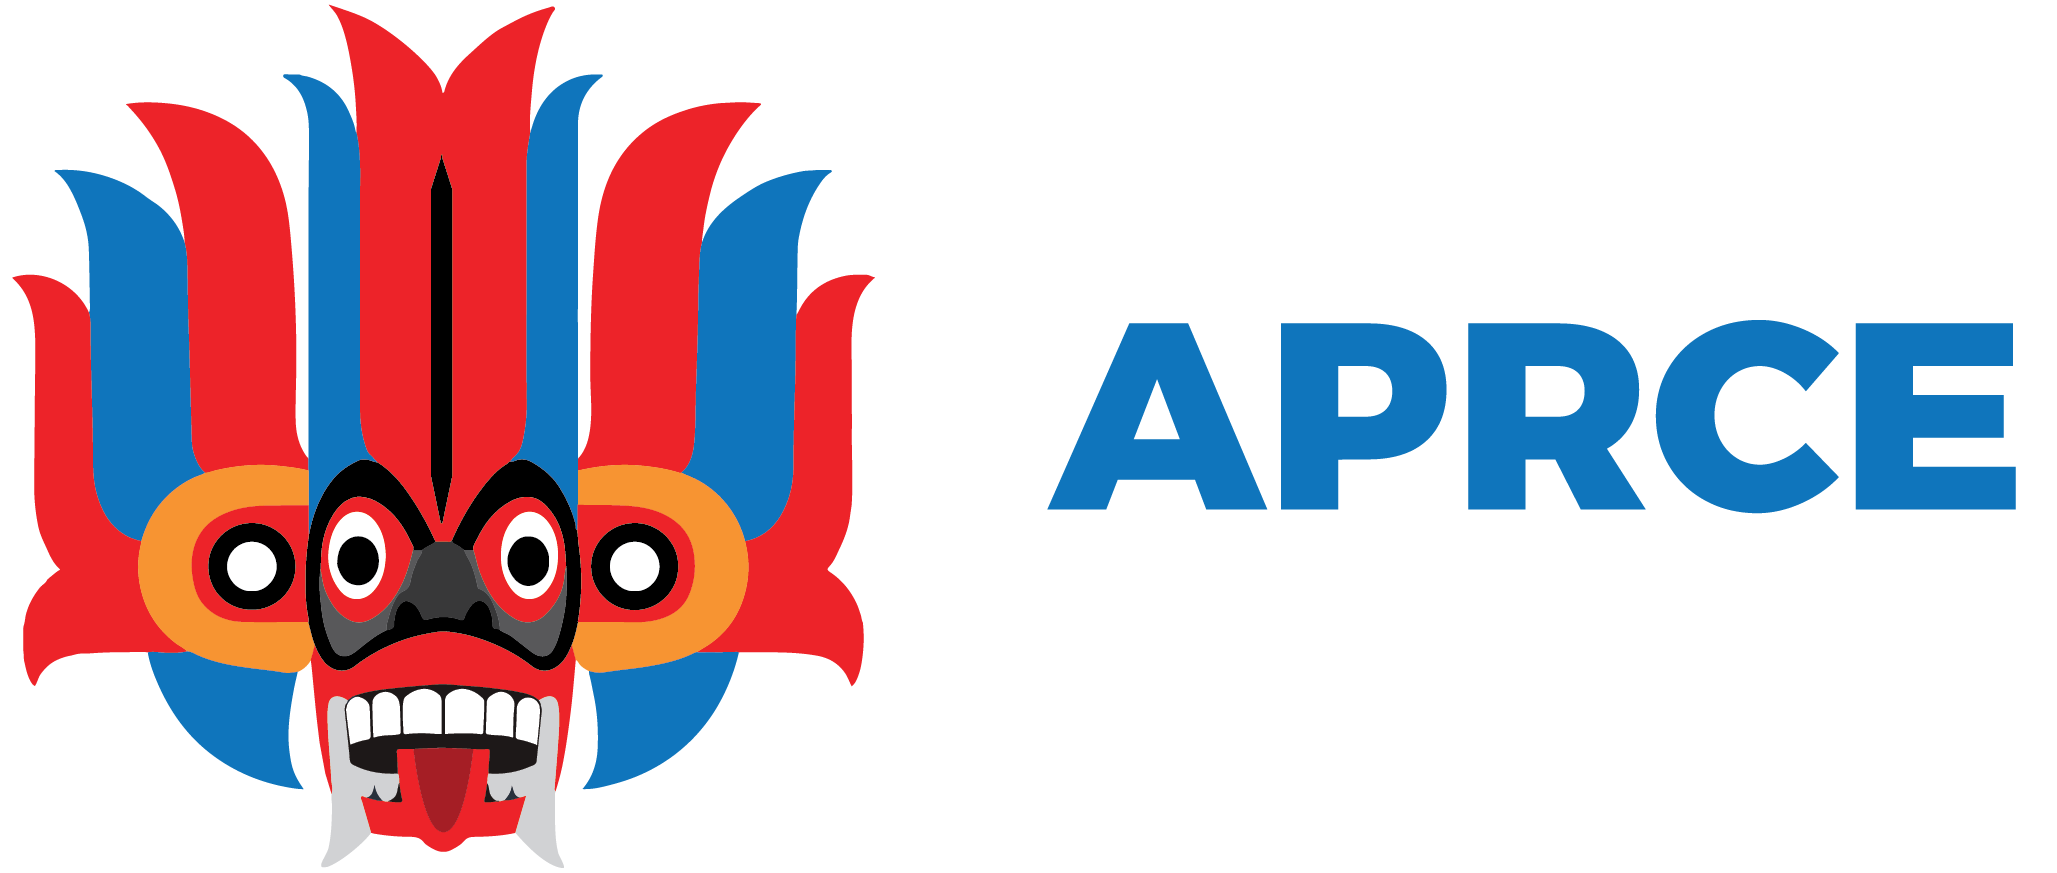 21st Asia-Pacific Retailers Convention & Exhibition Sri Lanka